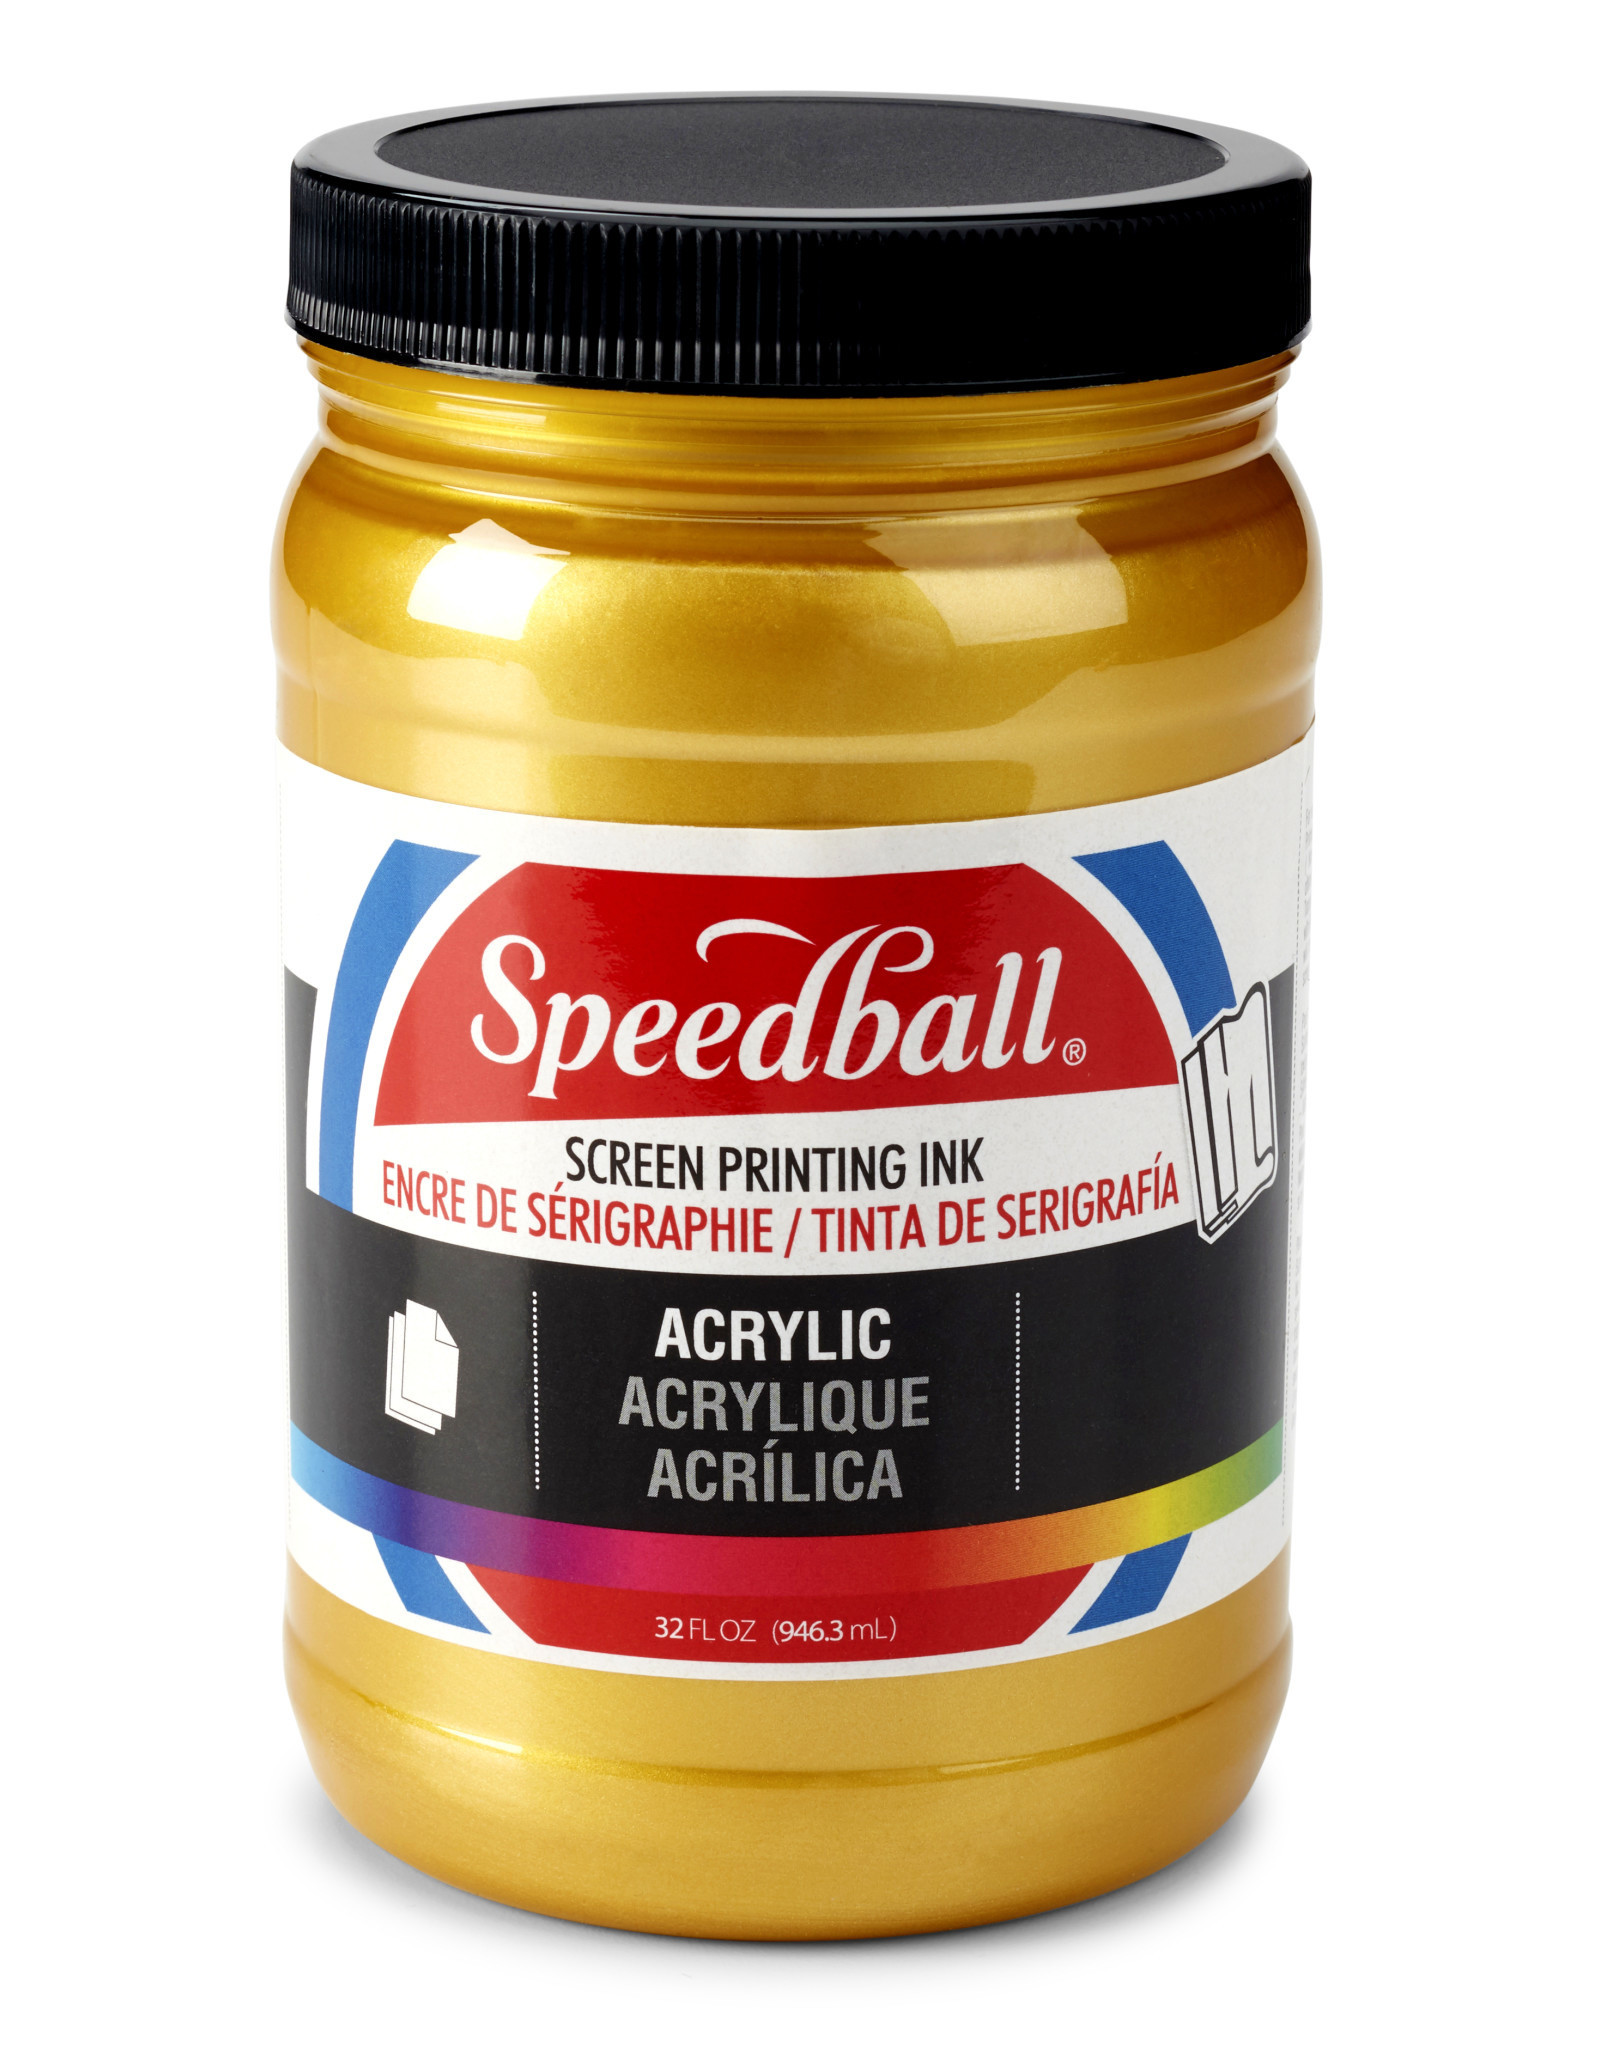 SPEEDBALL ART PRODUCTS Speedball Acrylic Screen Printing Ink, Gold, 32oz